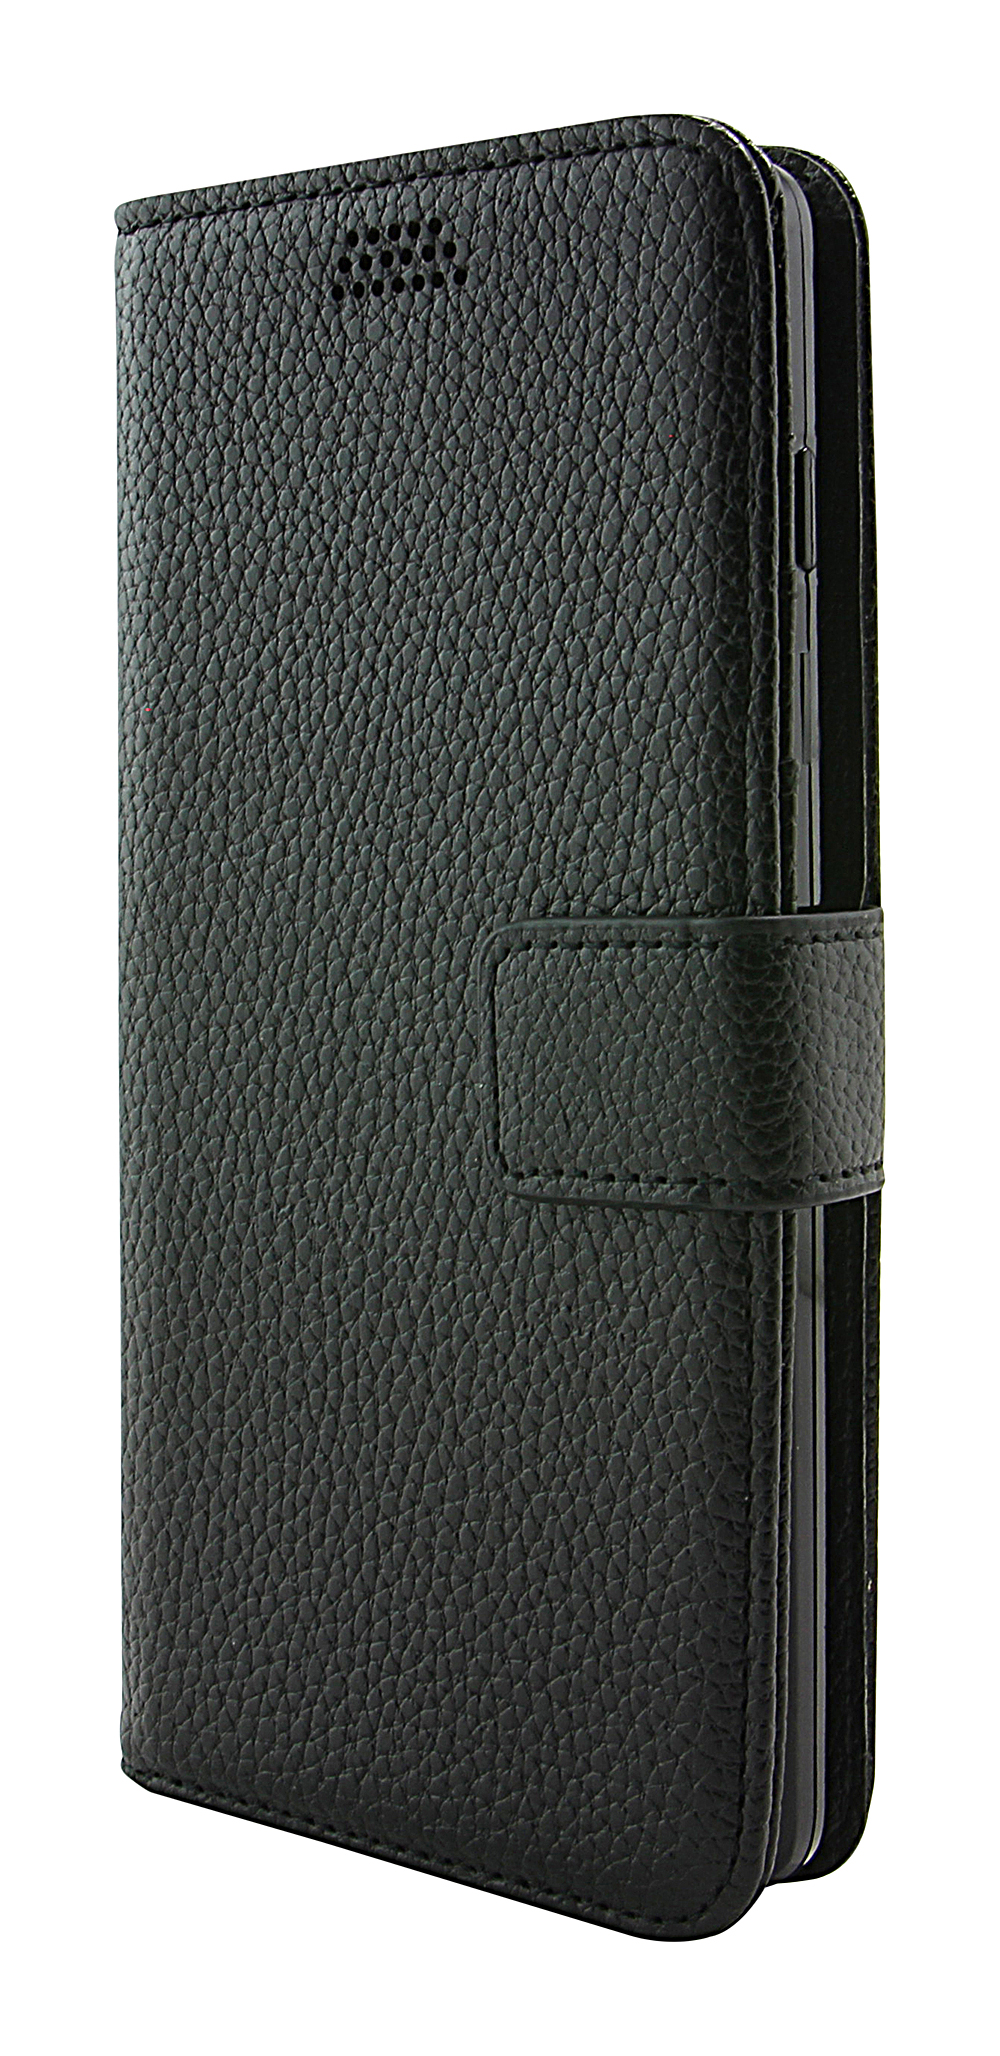 billigamobilskydd.seNew Standcase Wallet Lenovo K6 (K33a48 / K33a42)